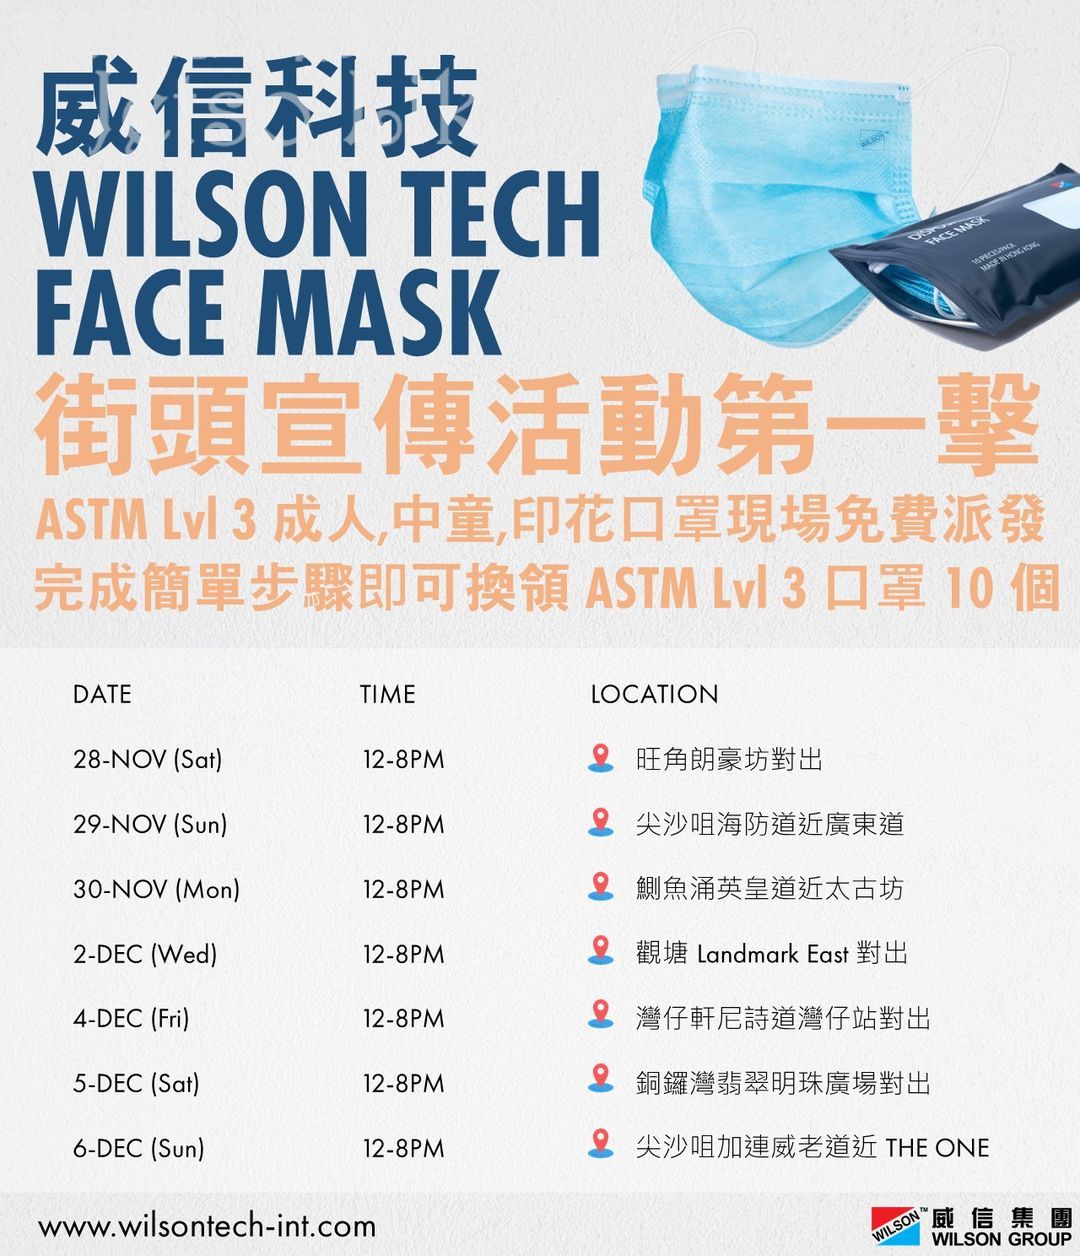 Wilson Tech Mask 免費派發 口罩精美密實袋裝